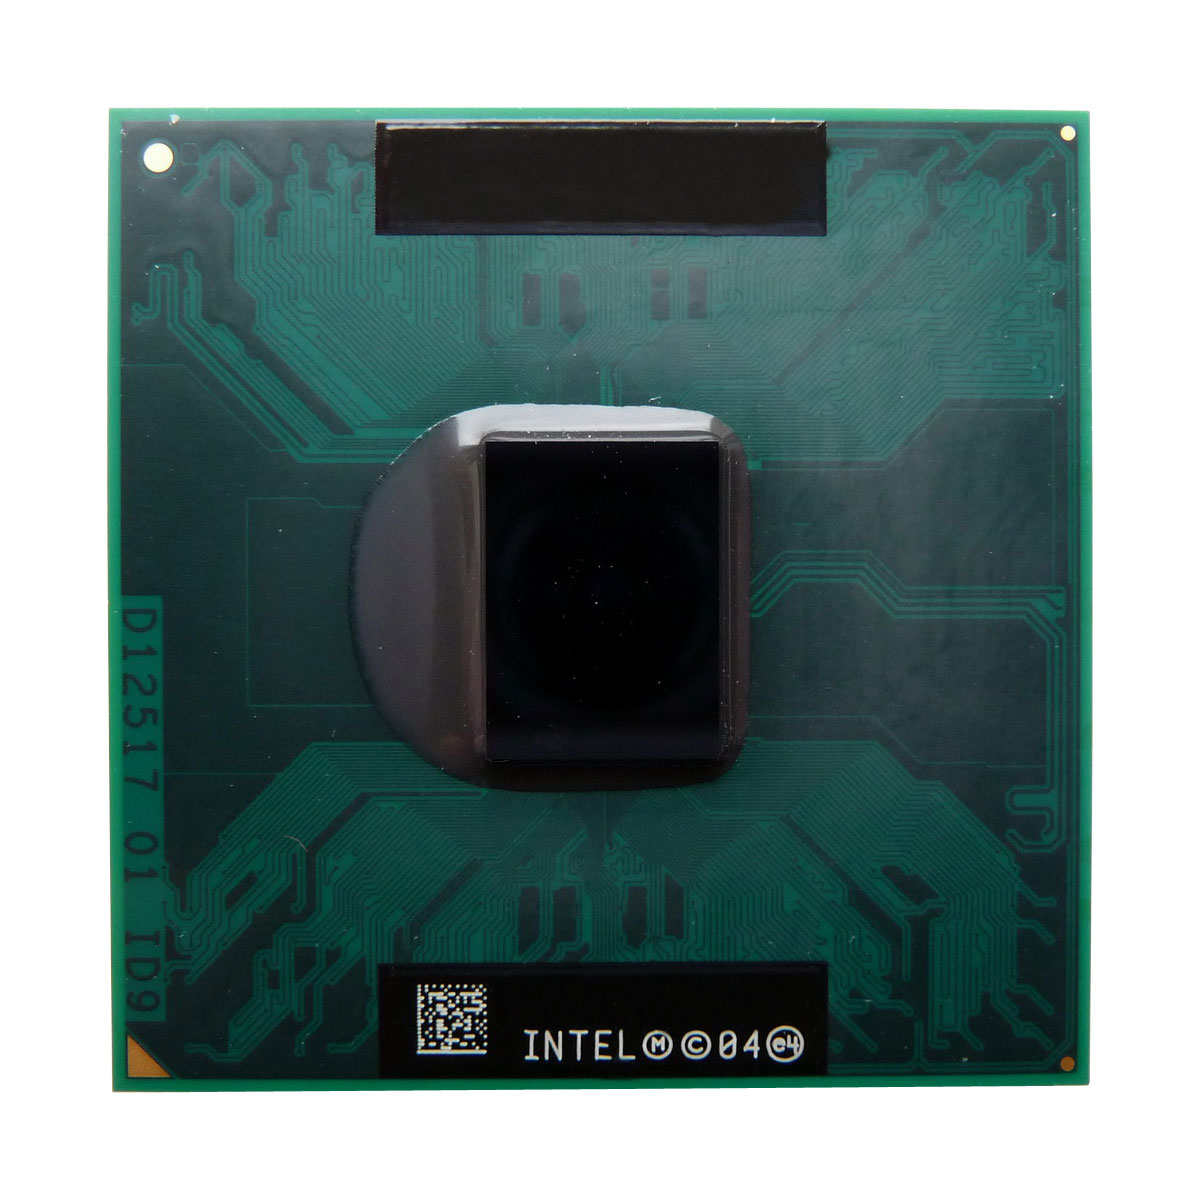 SL9JP Intel Core Duo T2700 Dual-Core 2.33GHz 667MHz FSB 2MB L2 Cache Socket PGA478 Mobile Processor